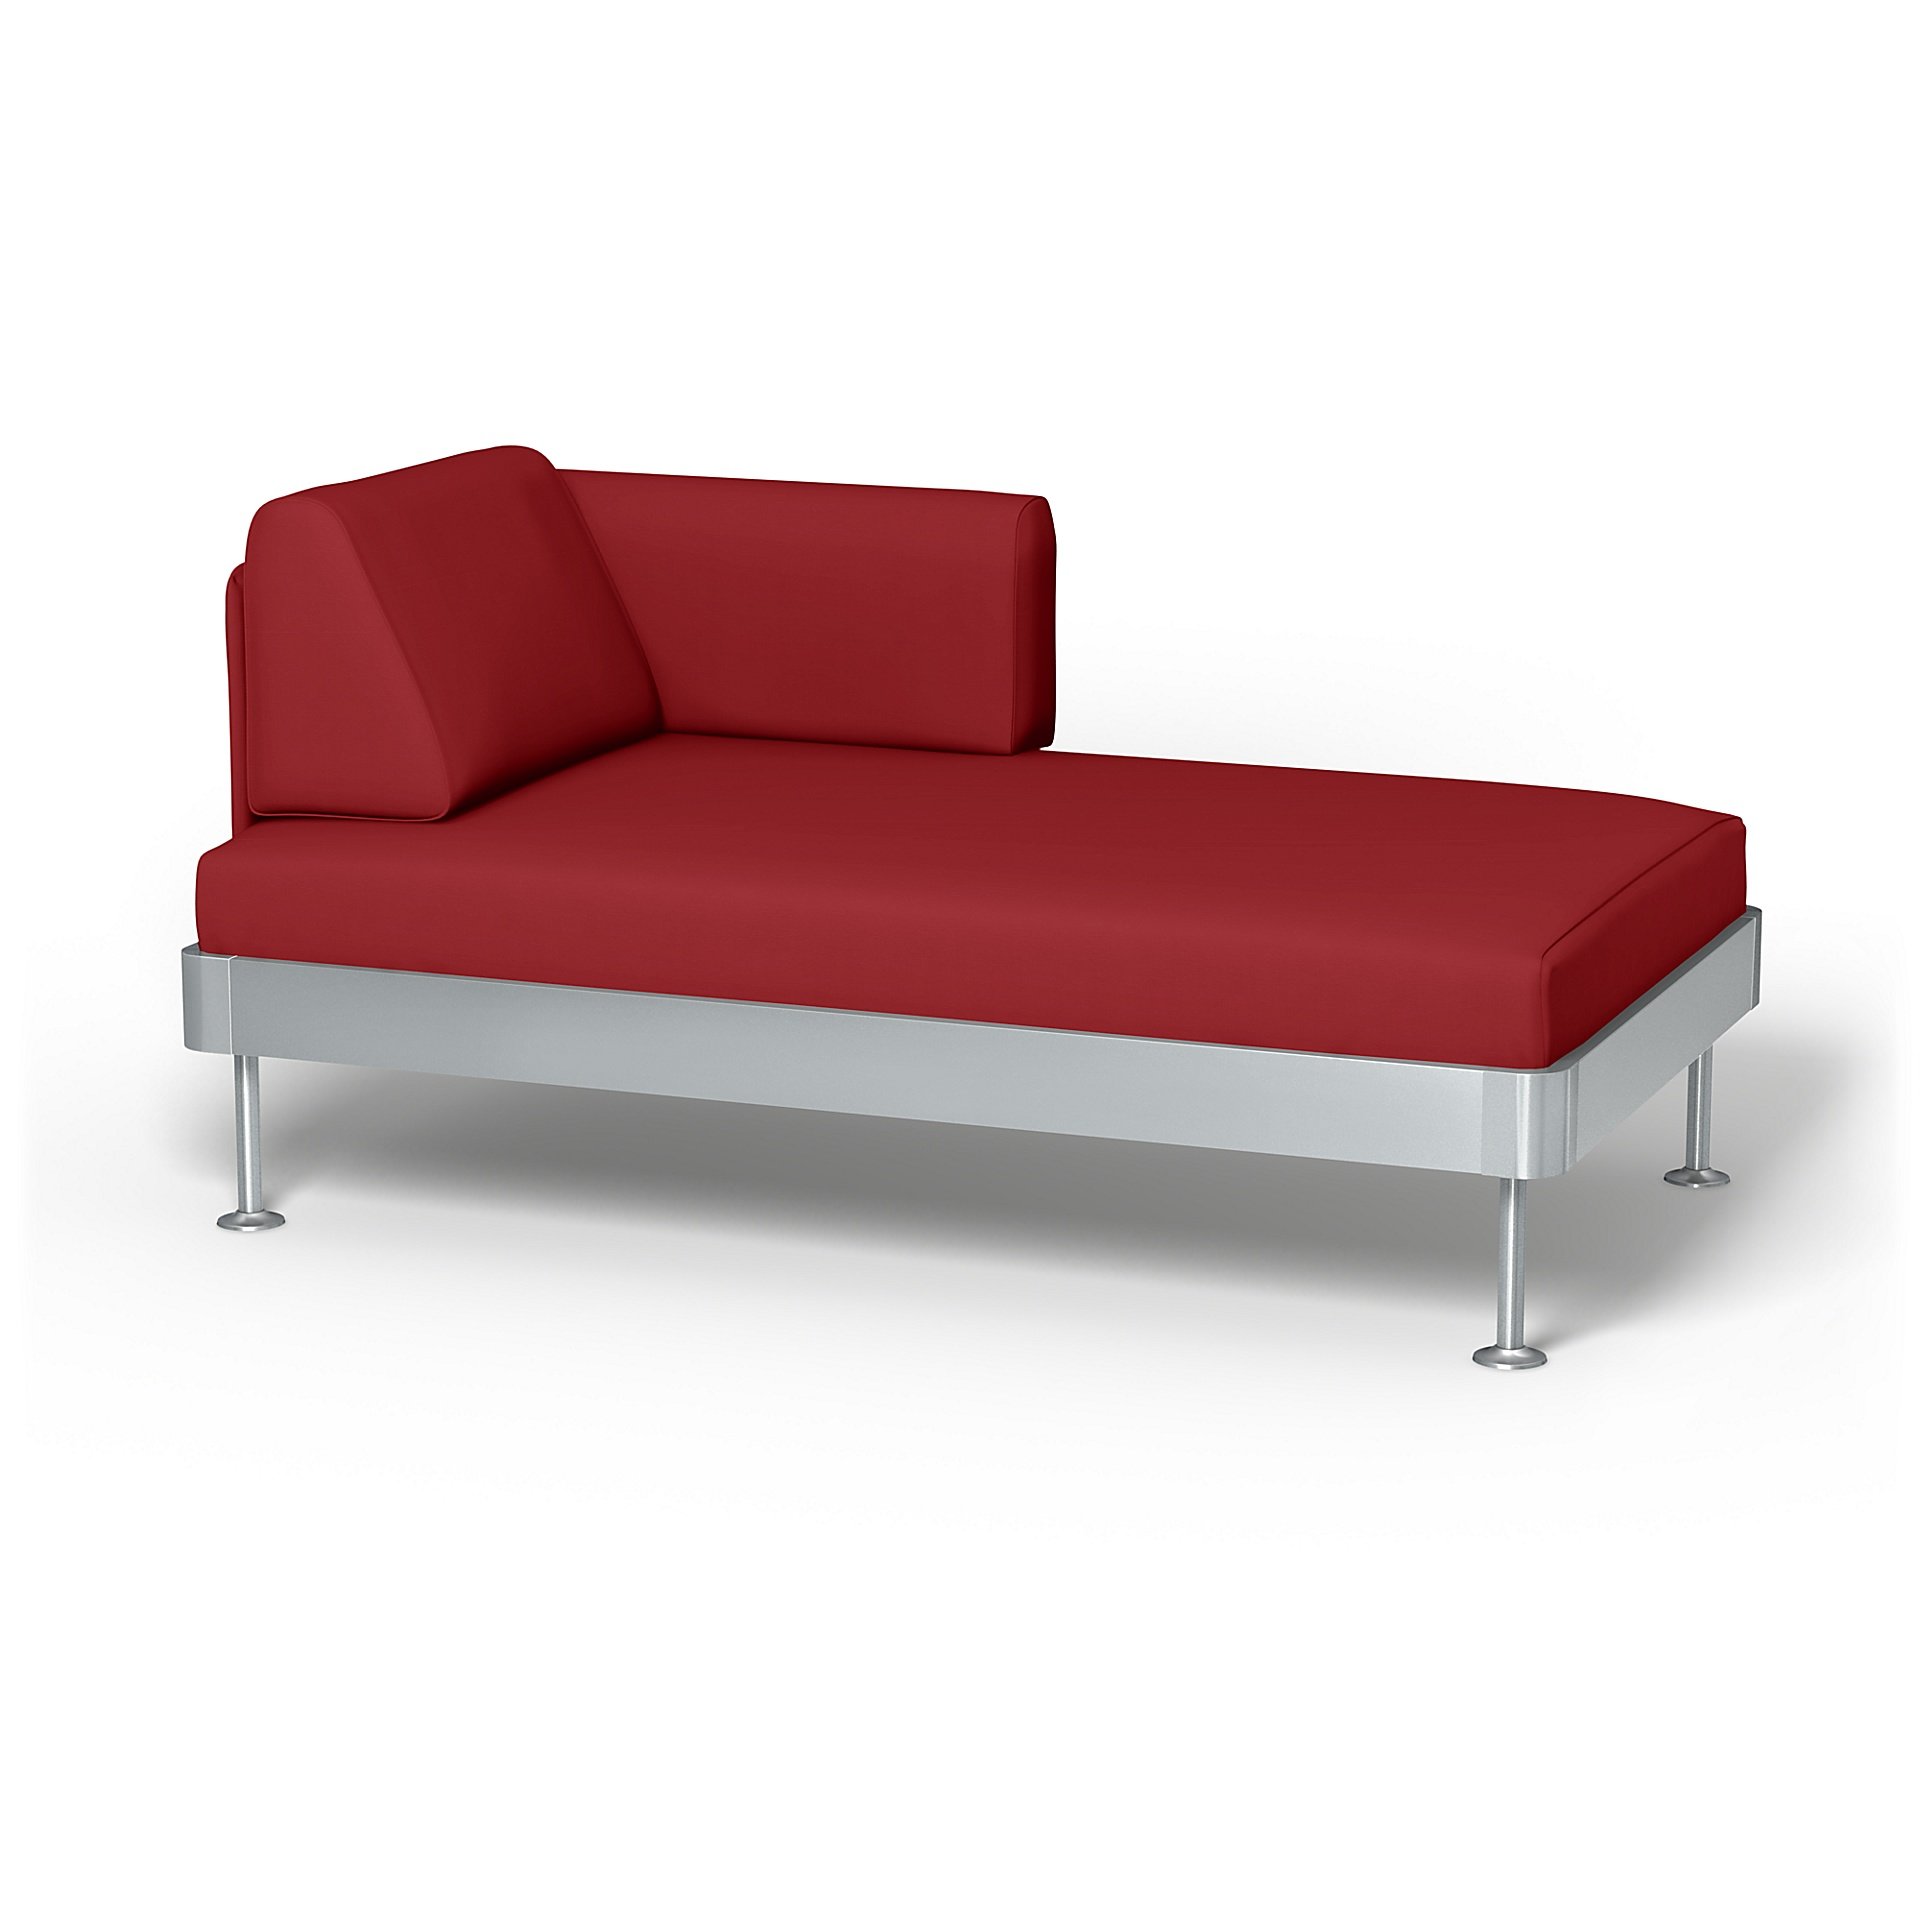 IKEA - Delaktig Chaise Longue Cover, Scarlet Red, Cotton - Bemz